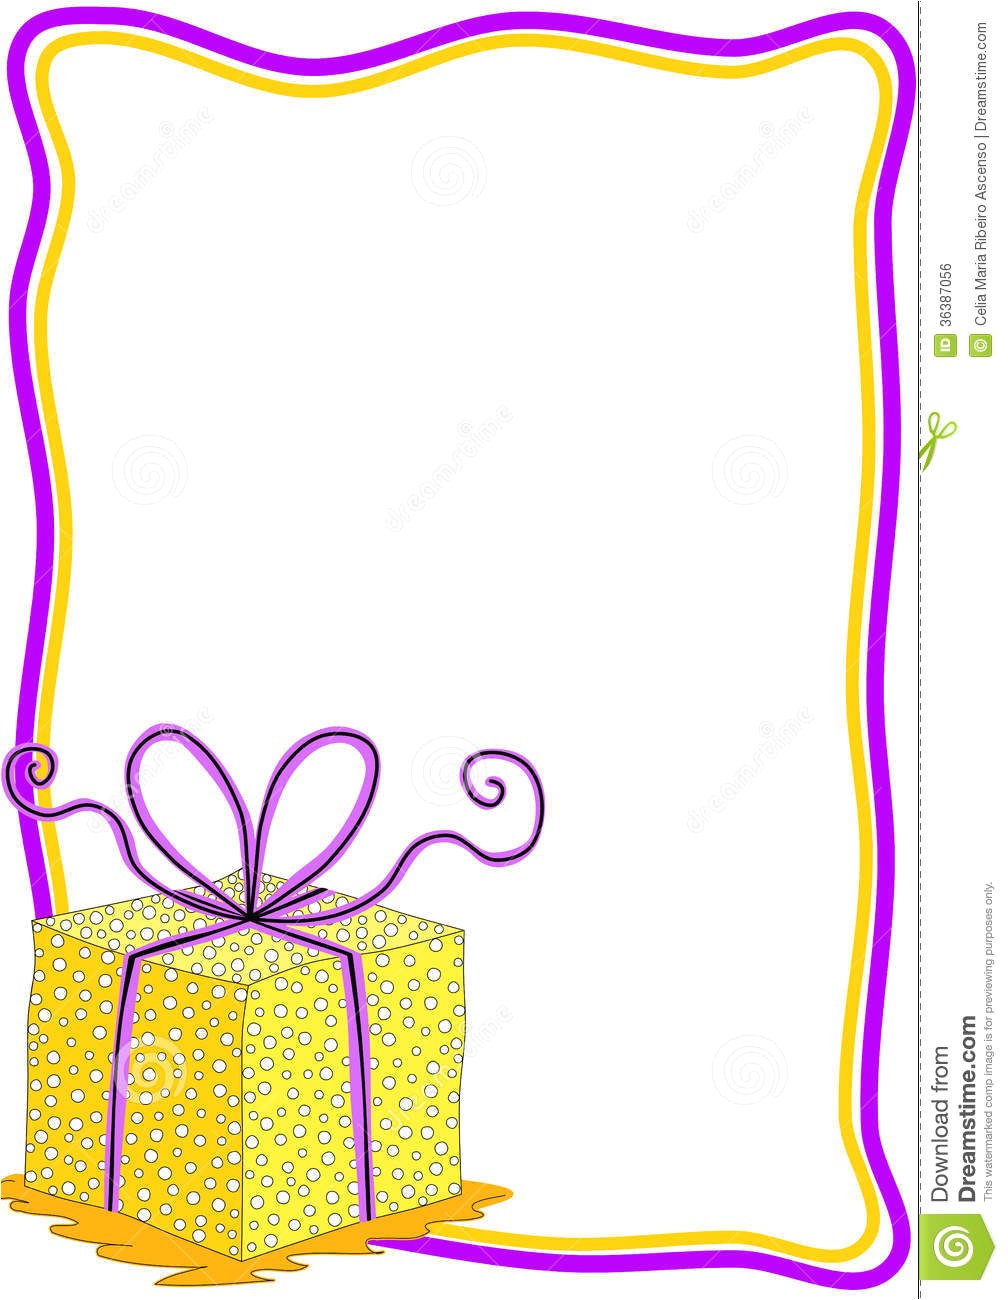 royalty free stock image t box invitation card frame birthday tag border polka dot image